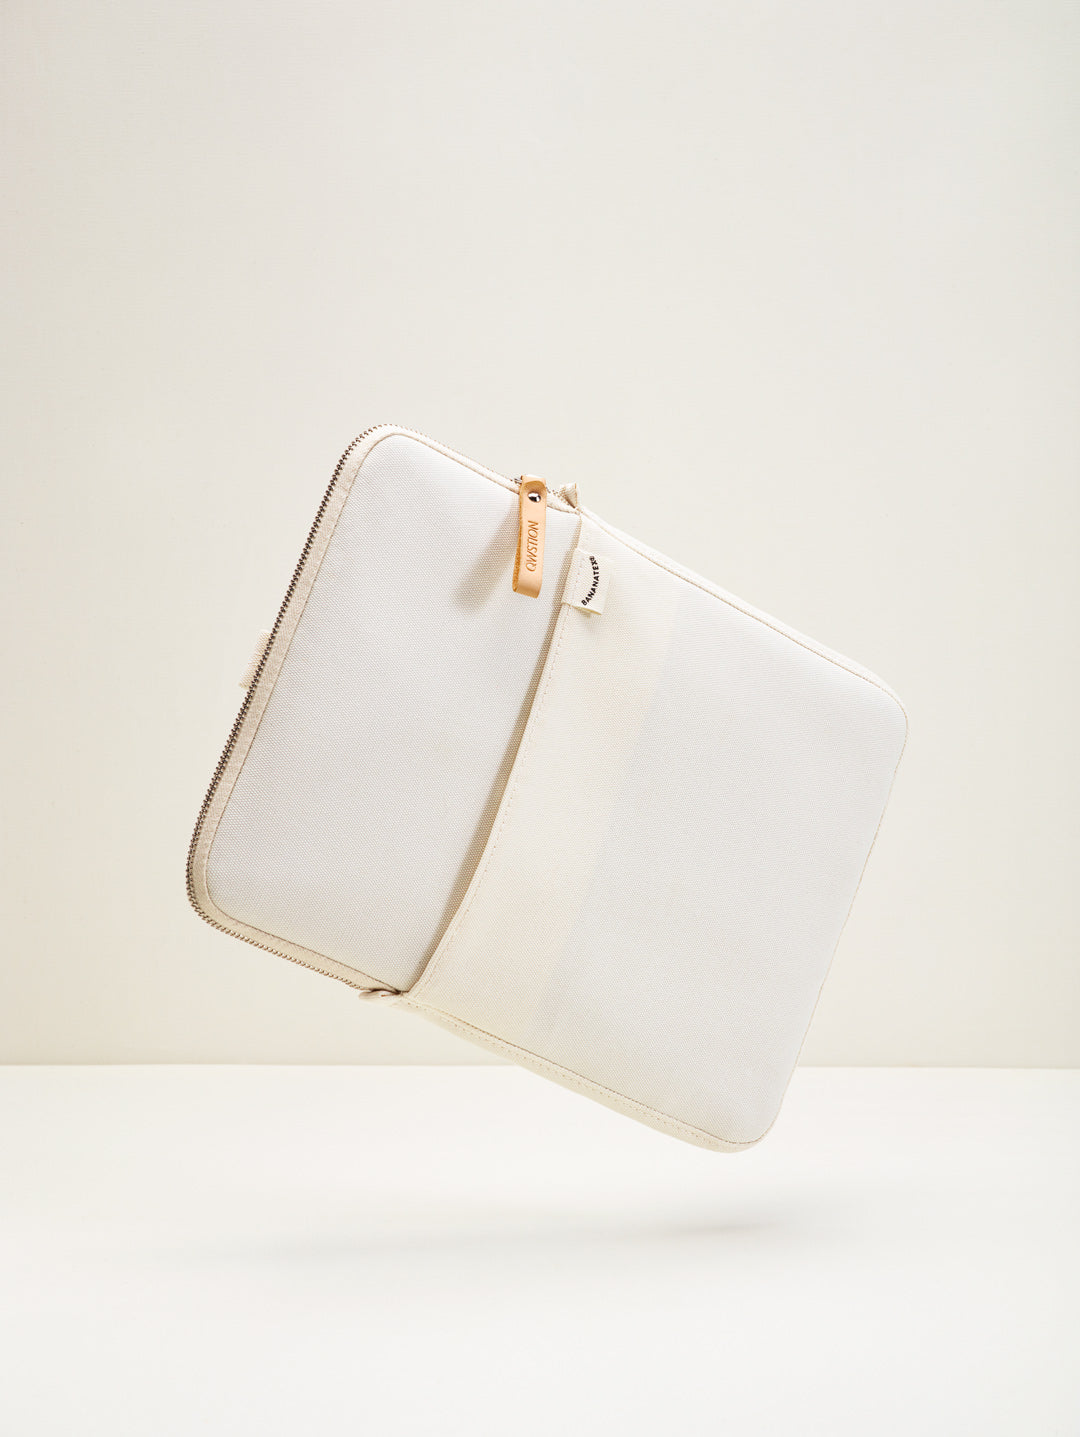 Bananatex Sleeve for Macbook 16" – Natural White